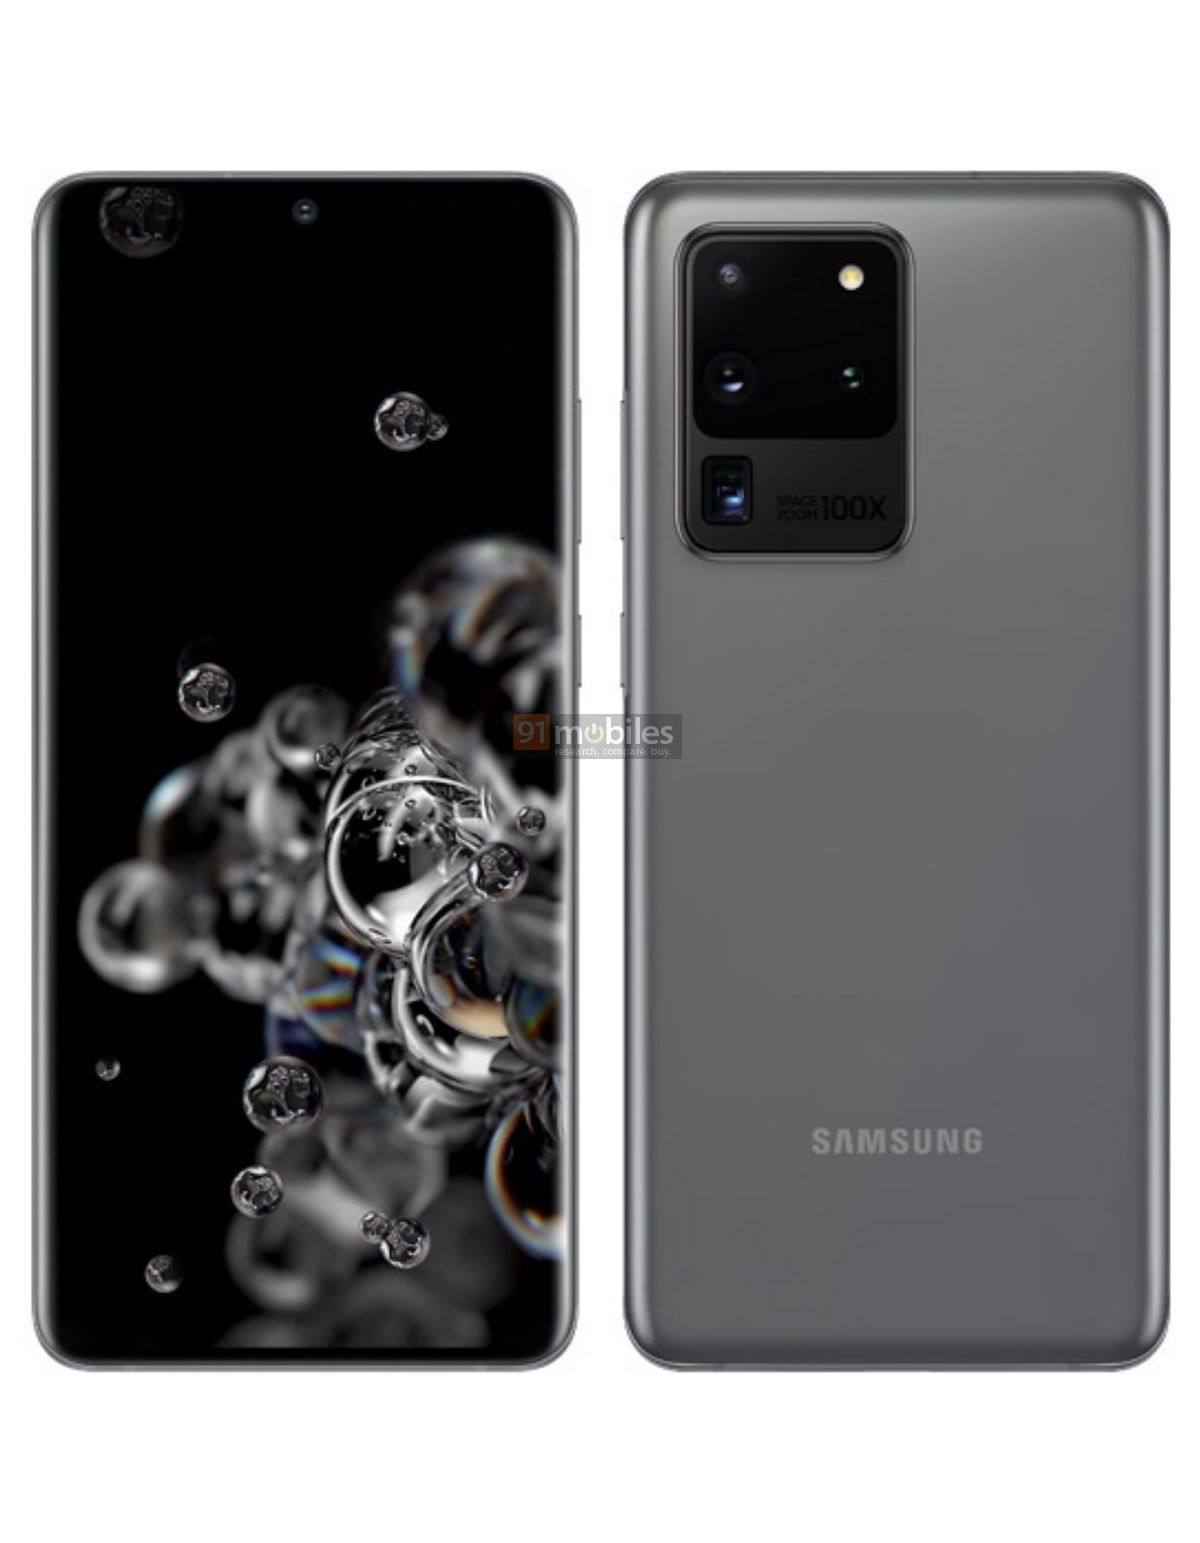 Galaxy S20 Ultra expect_01.jpg